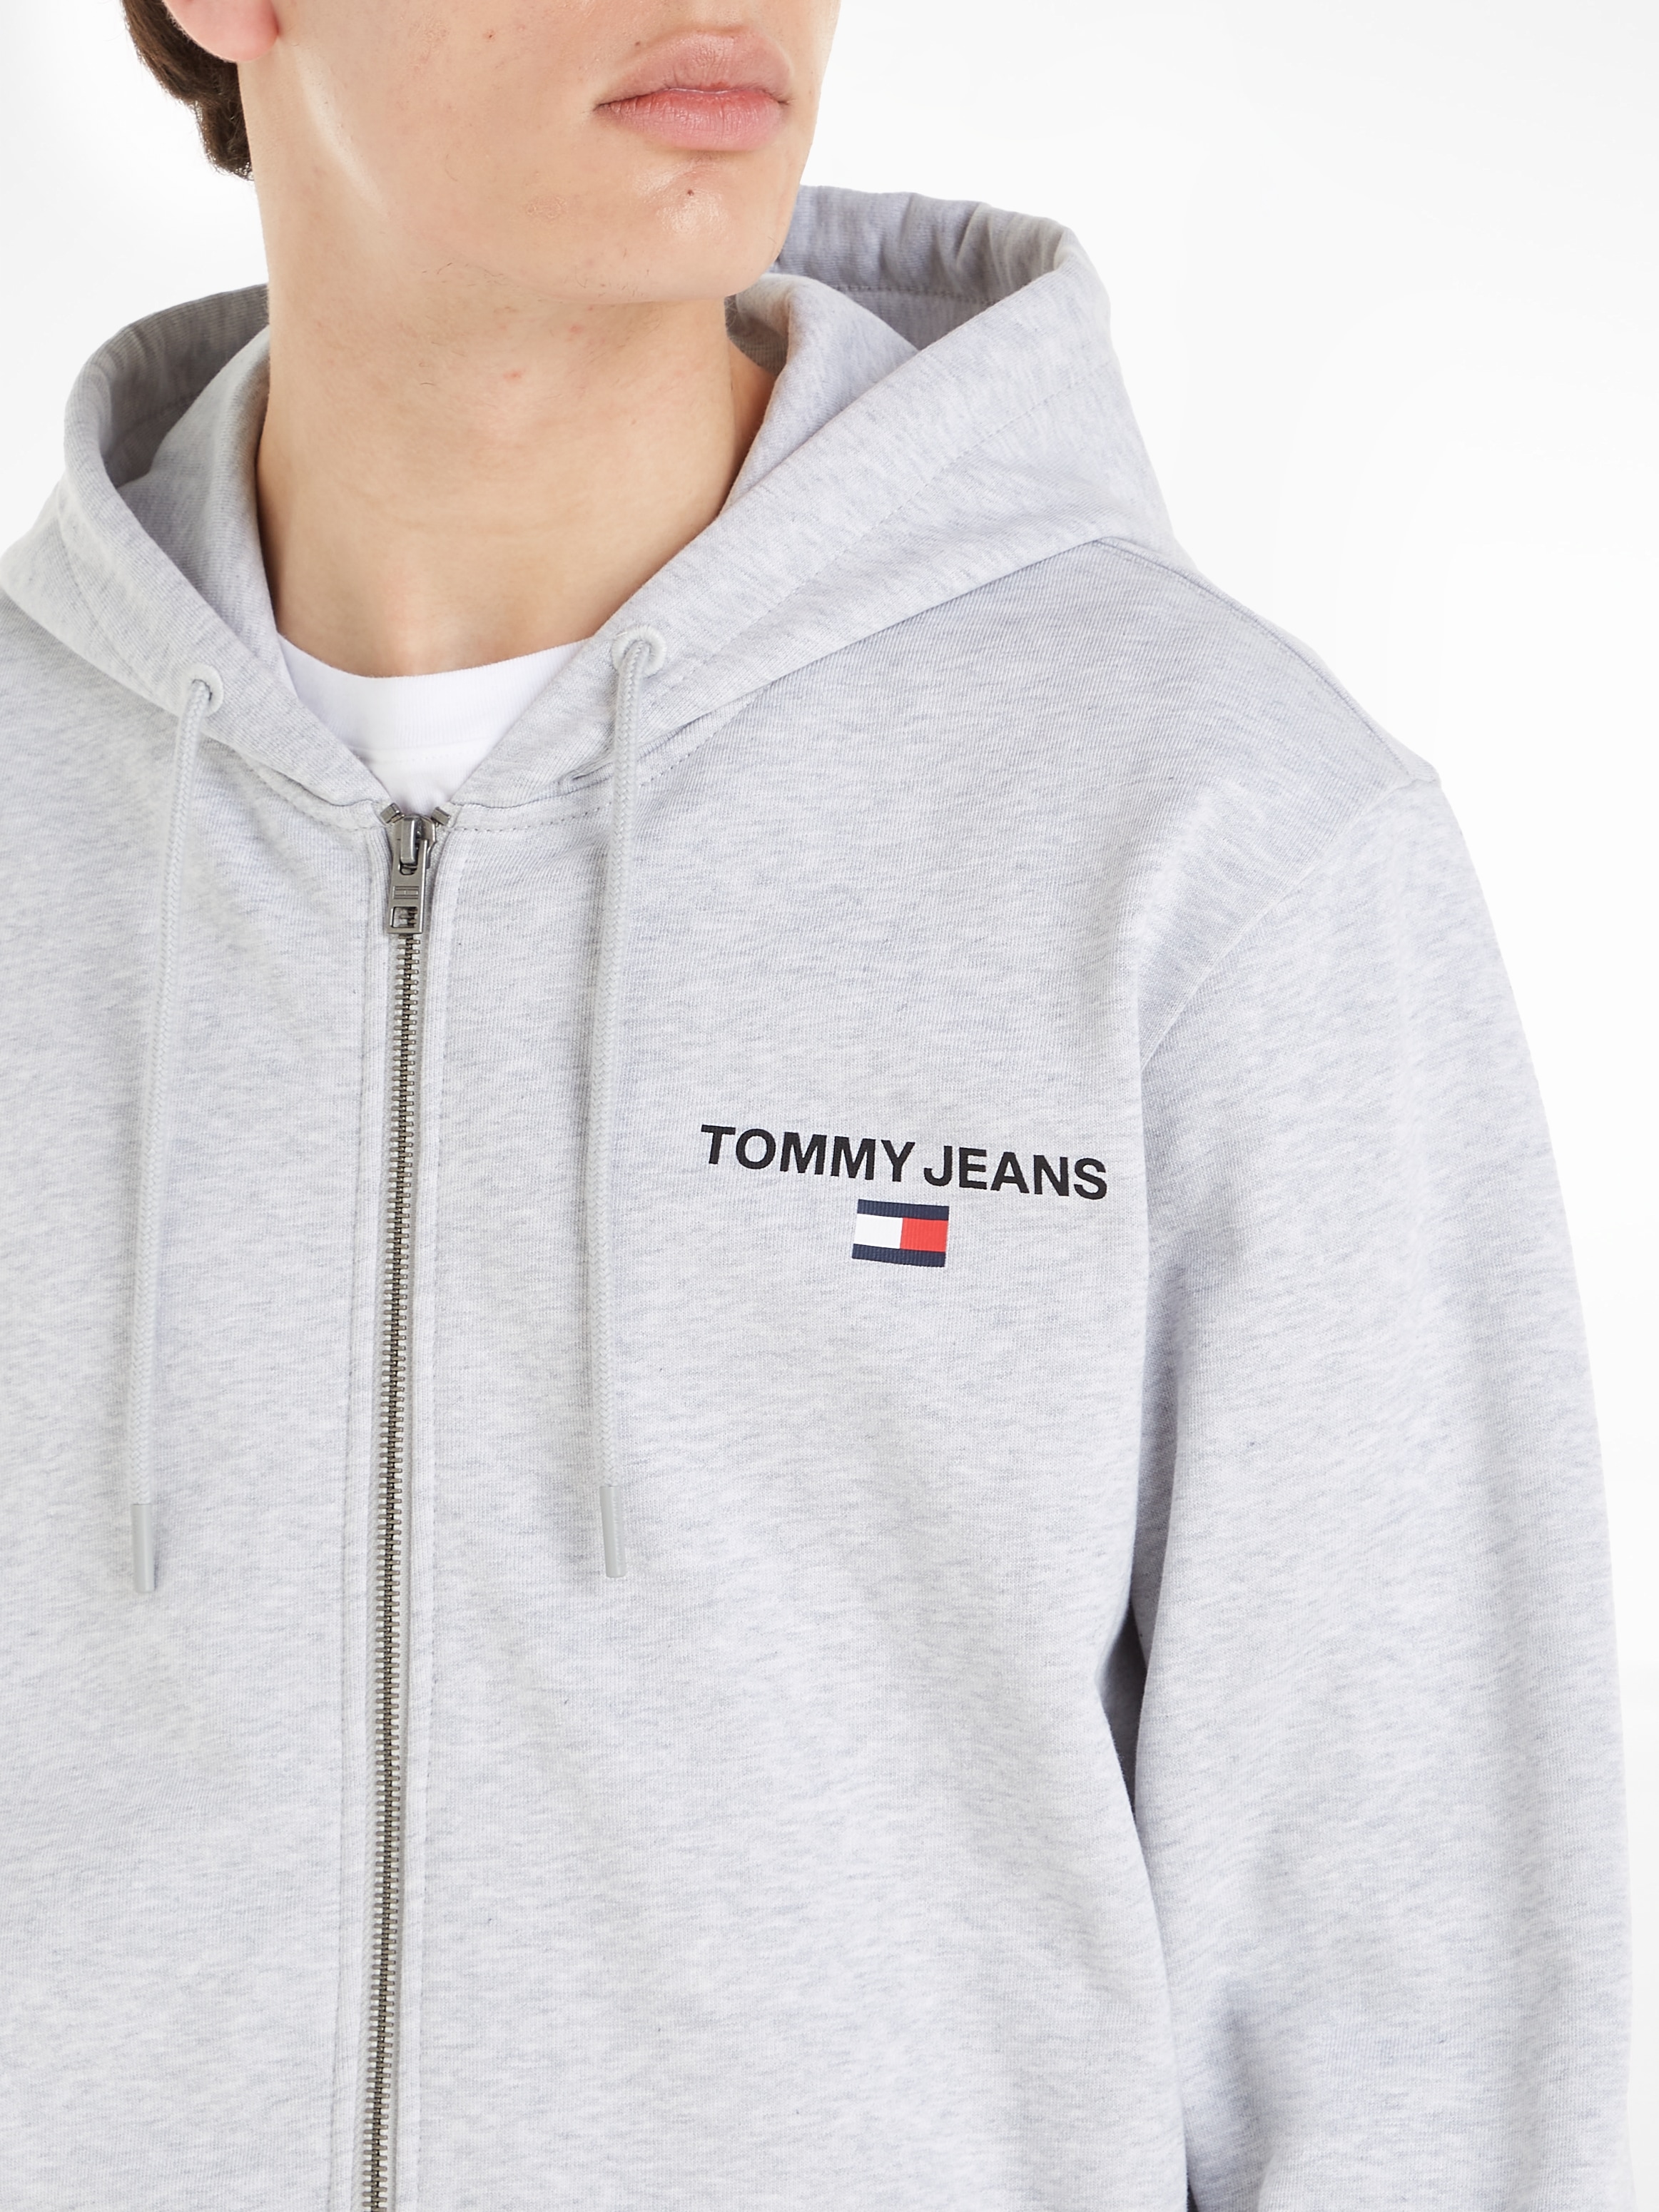 »TJM Jeans Sweatjacke ZIP-THRU REG ENTRY ♕ Tommy HOODIE« bei